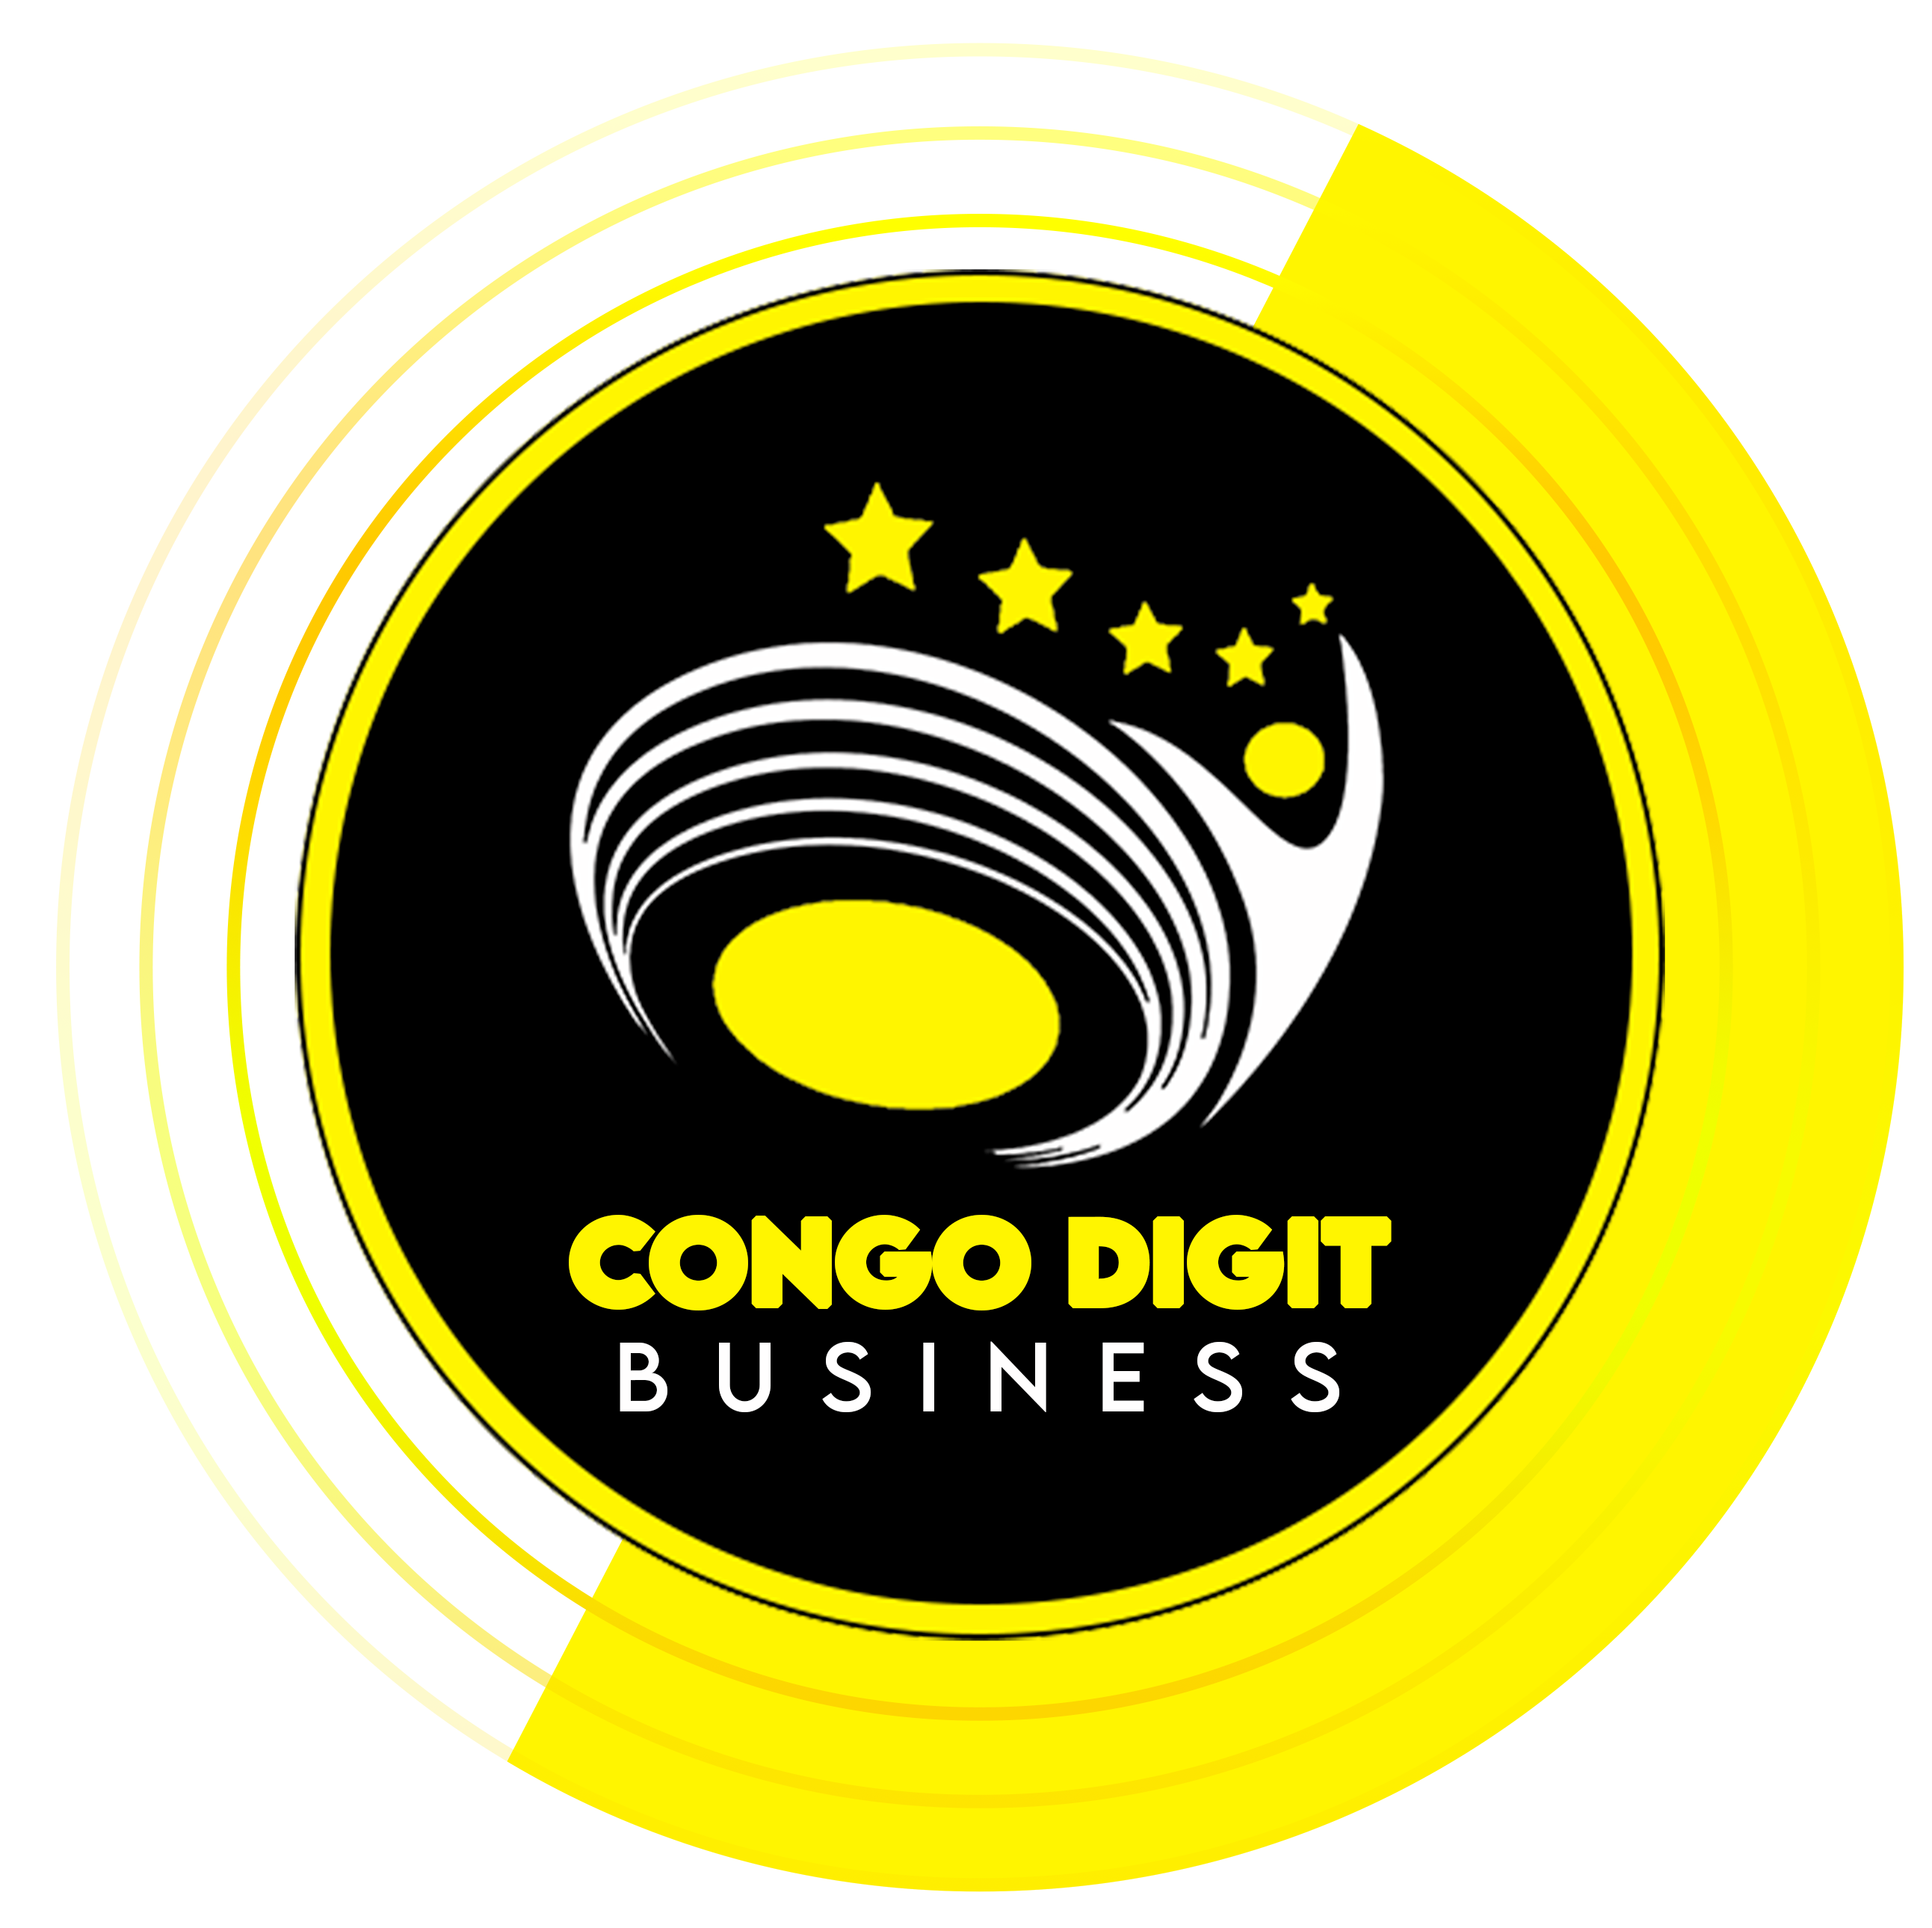 Congo Digit Business